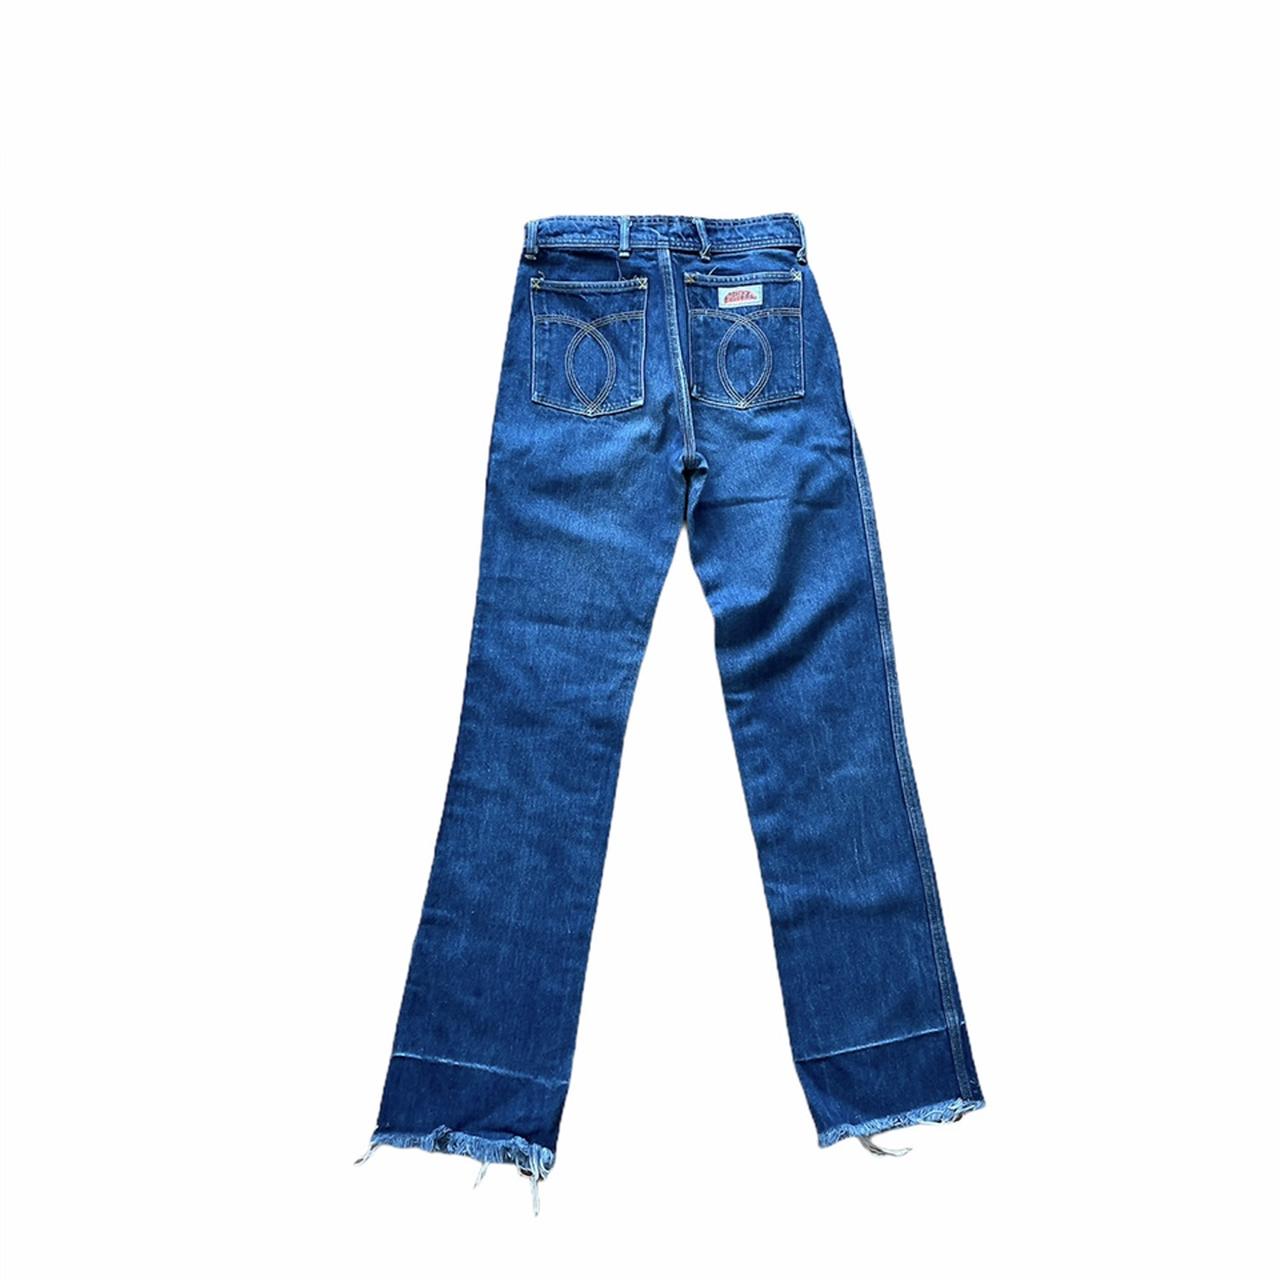 Amazing vintage 1970s Sticky Fingers jeans 100%... - Depop